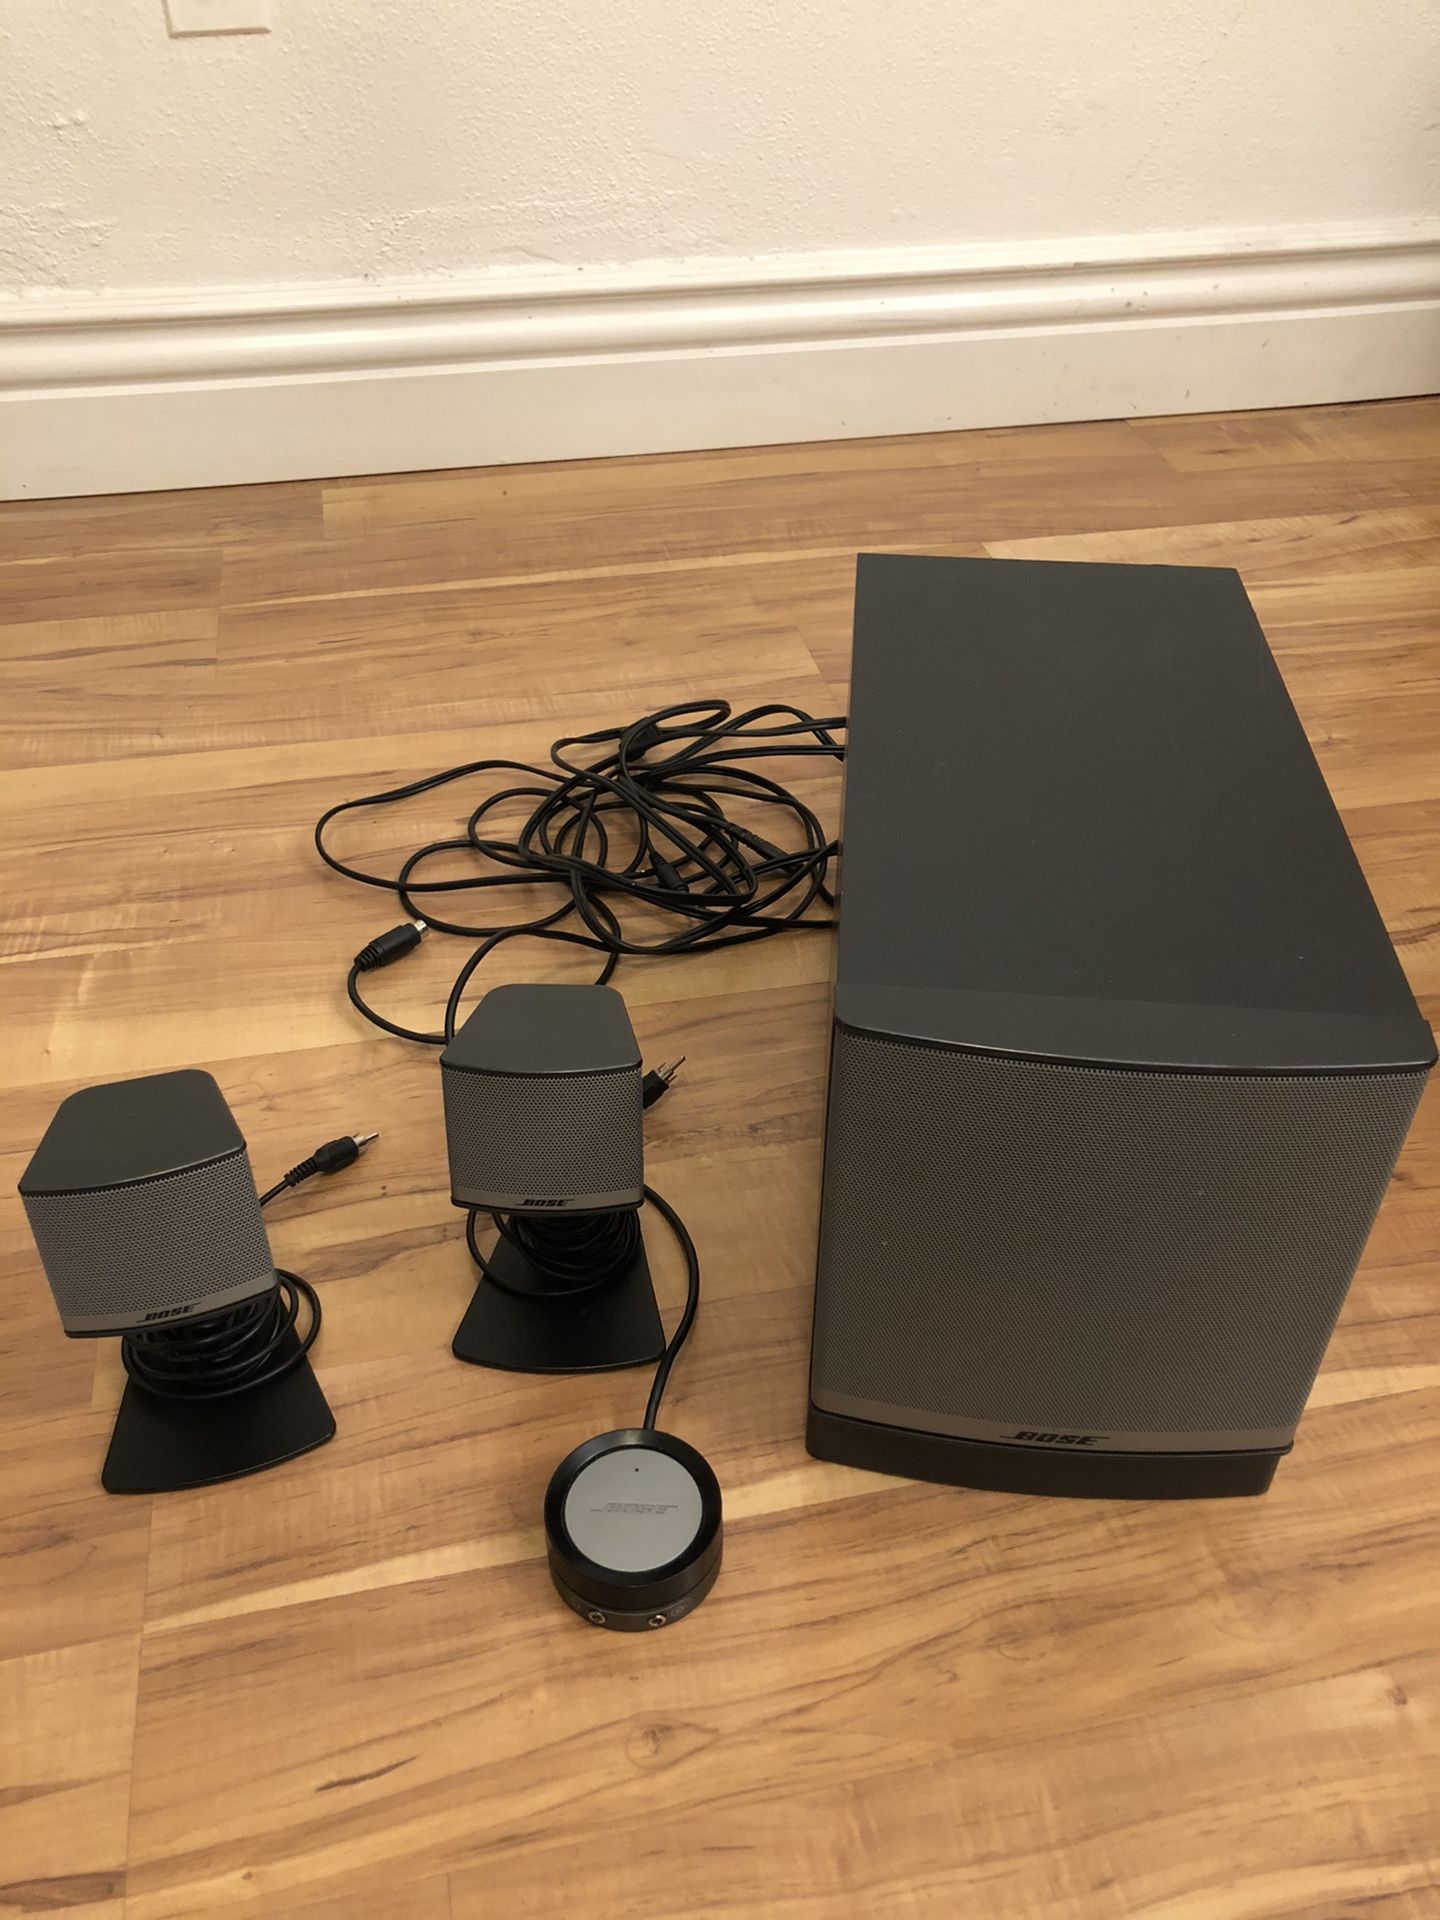 Bose Companion 3 series 2 multimedia speaker system